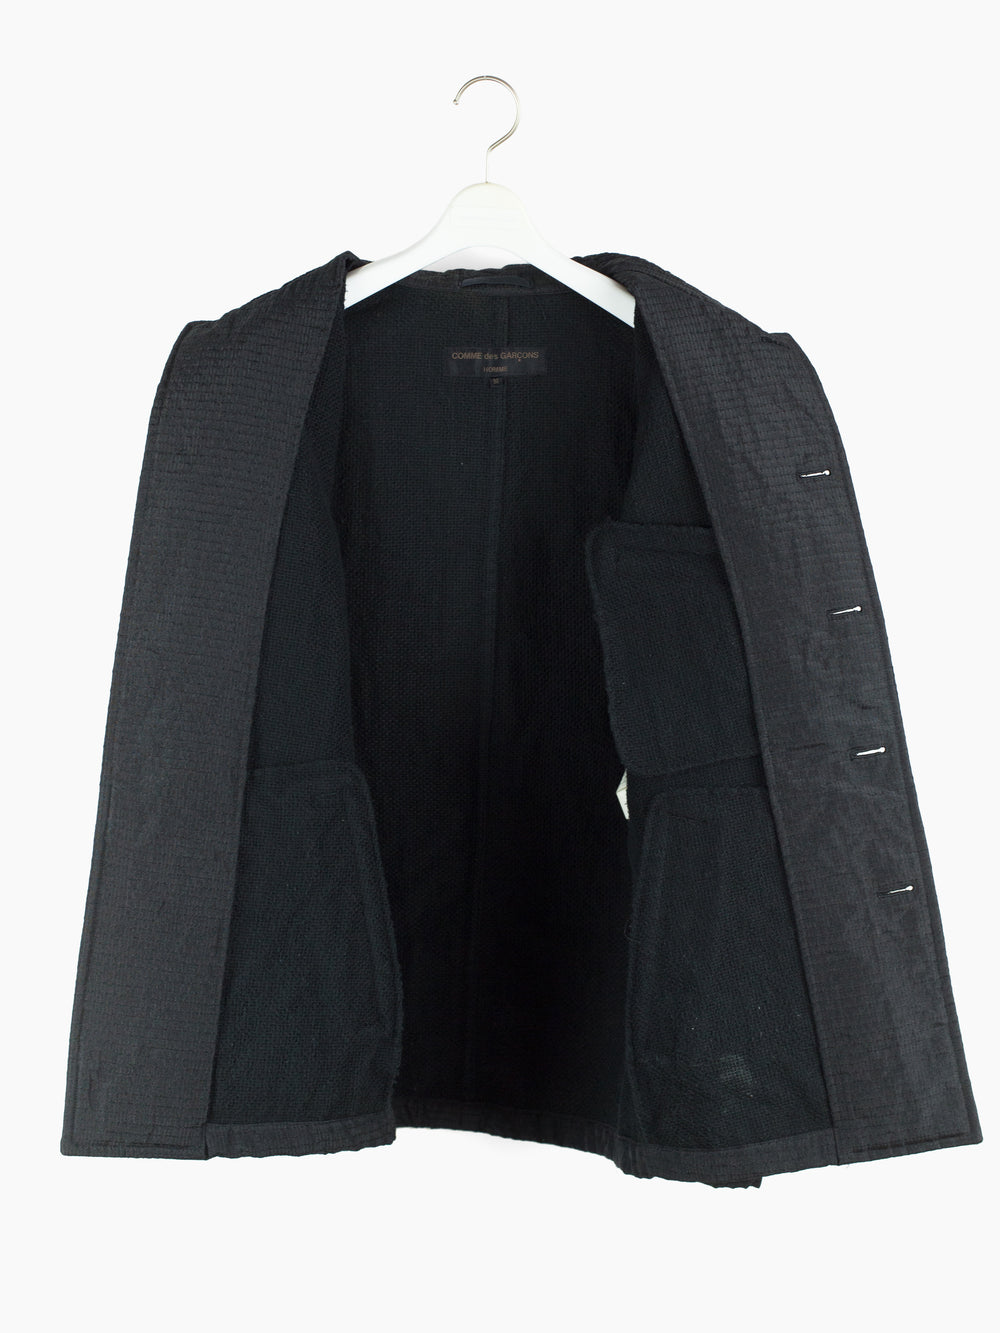 Comme des Garçons Homme 2002 Sashiko Textured Deck Jacket